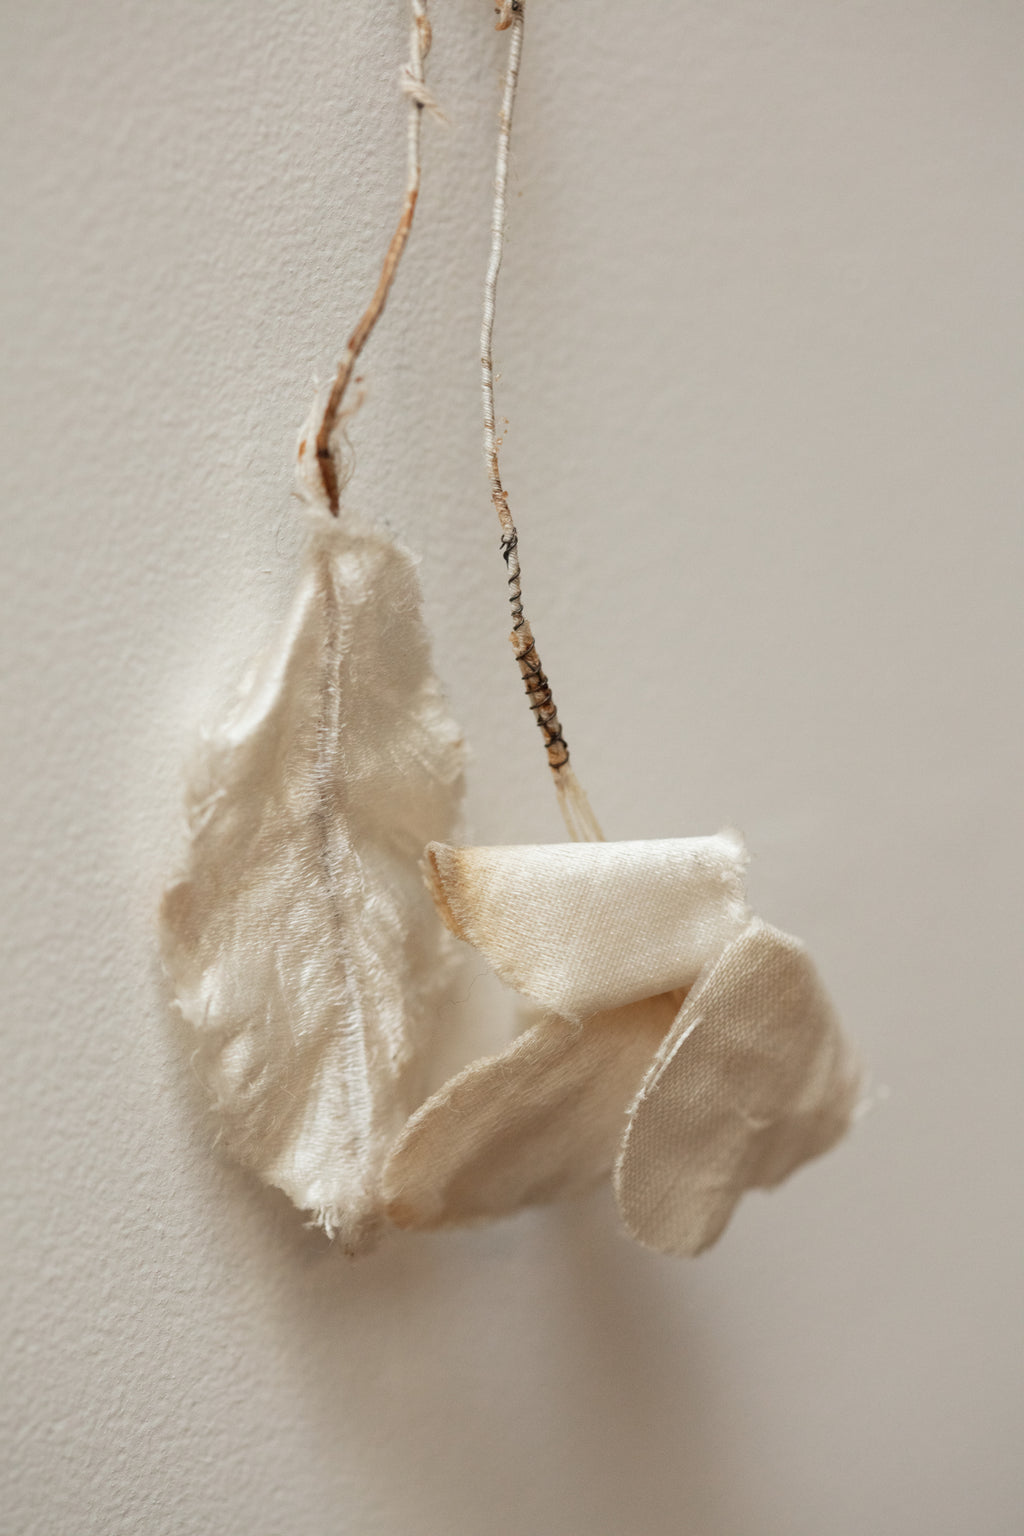 Untitled, Fabric Flower Fragments, Earring Hooks, 2021